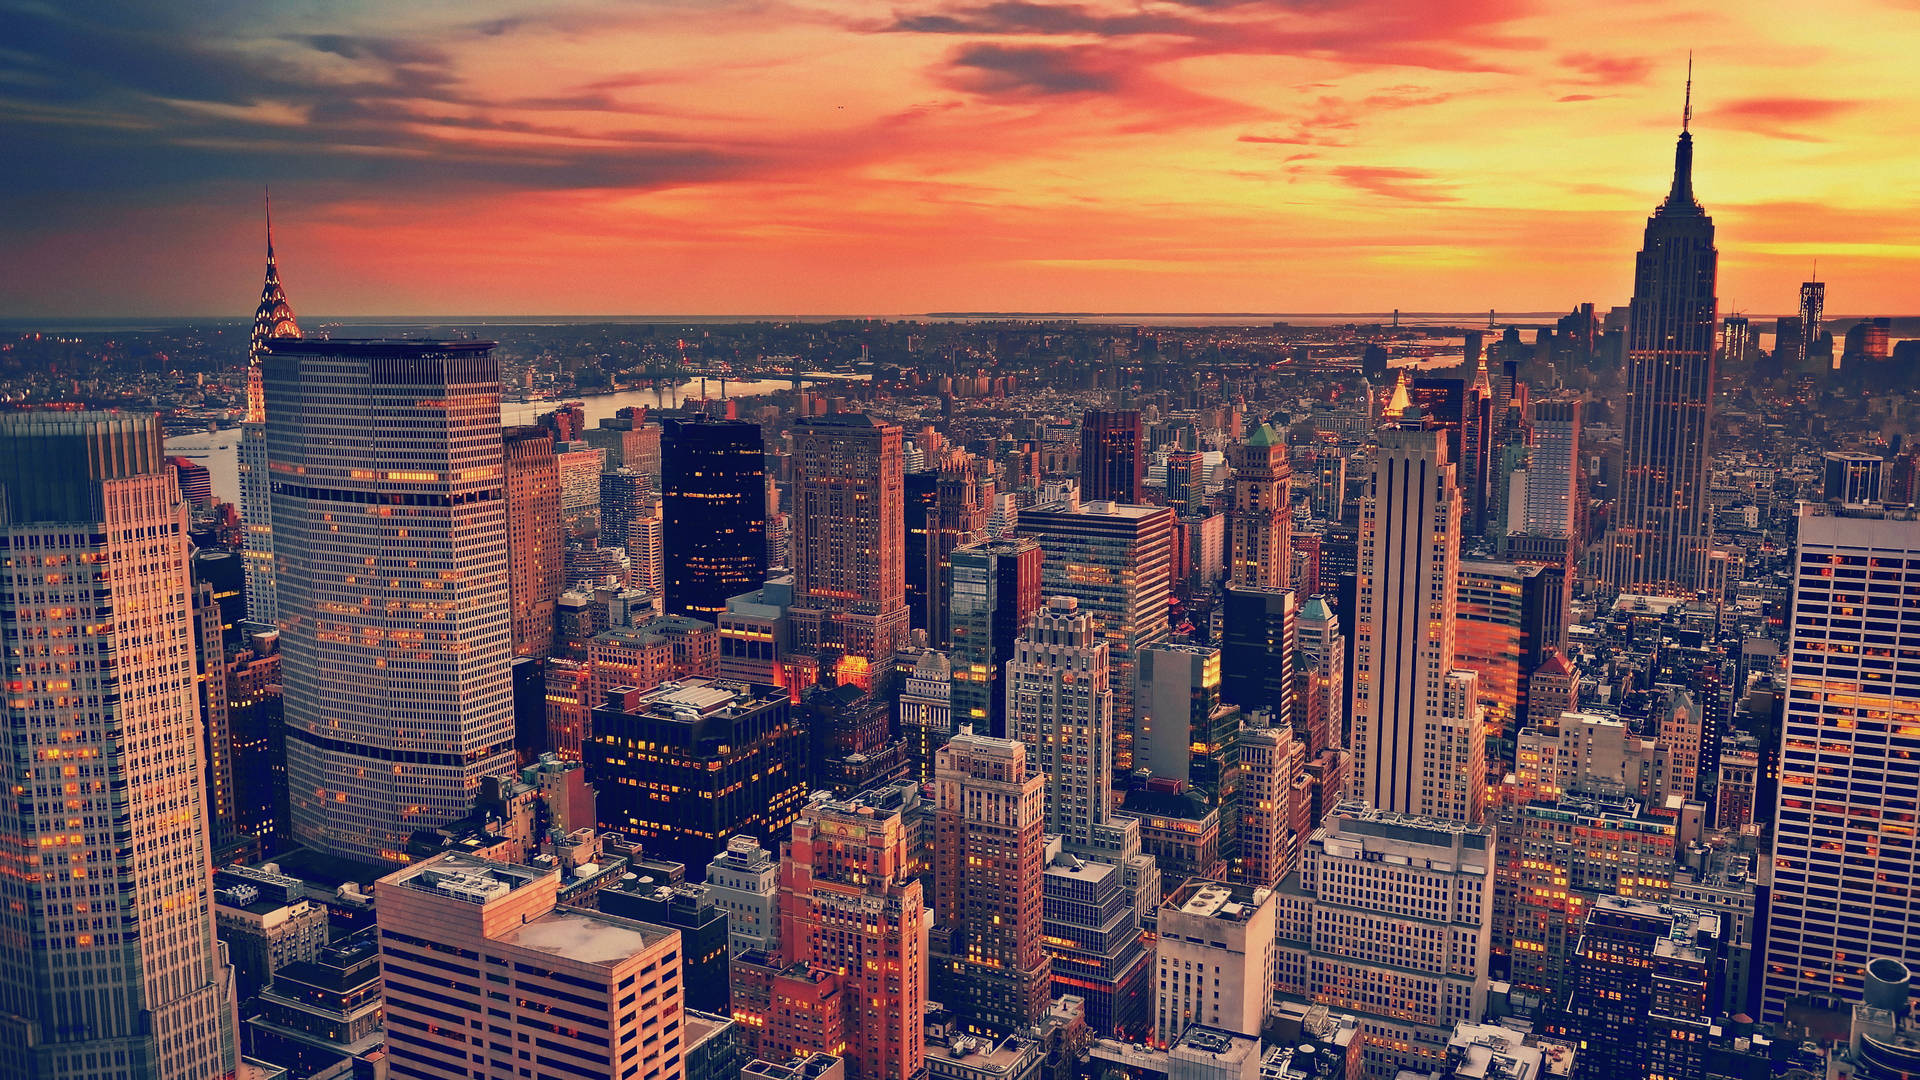 Caption: Majestic New York City Skyline At Sunset In 4k